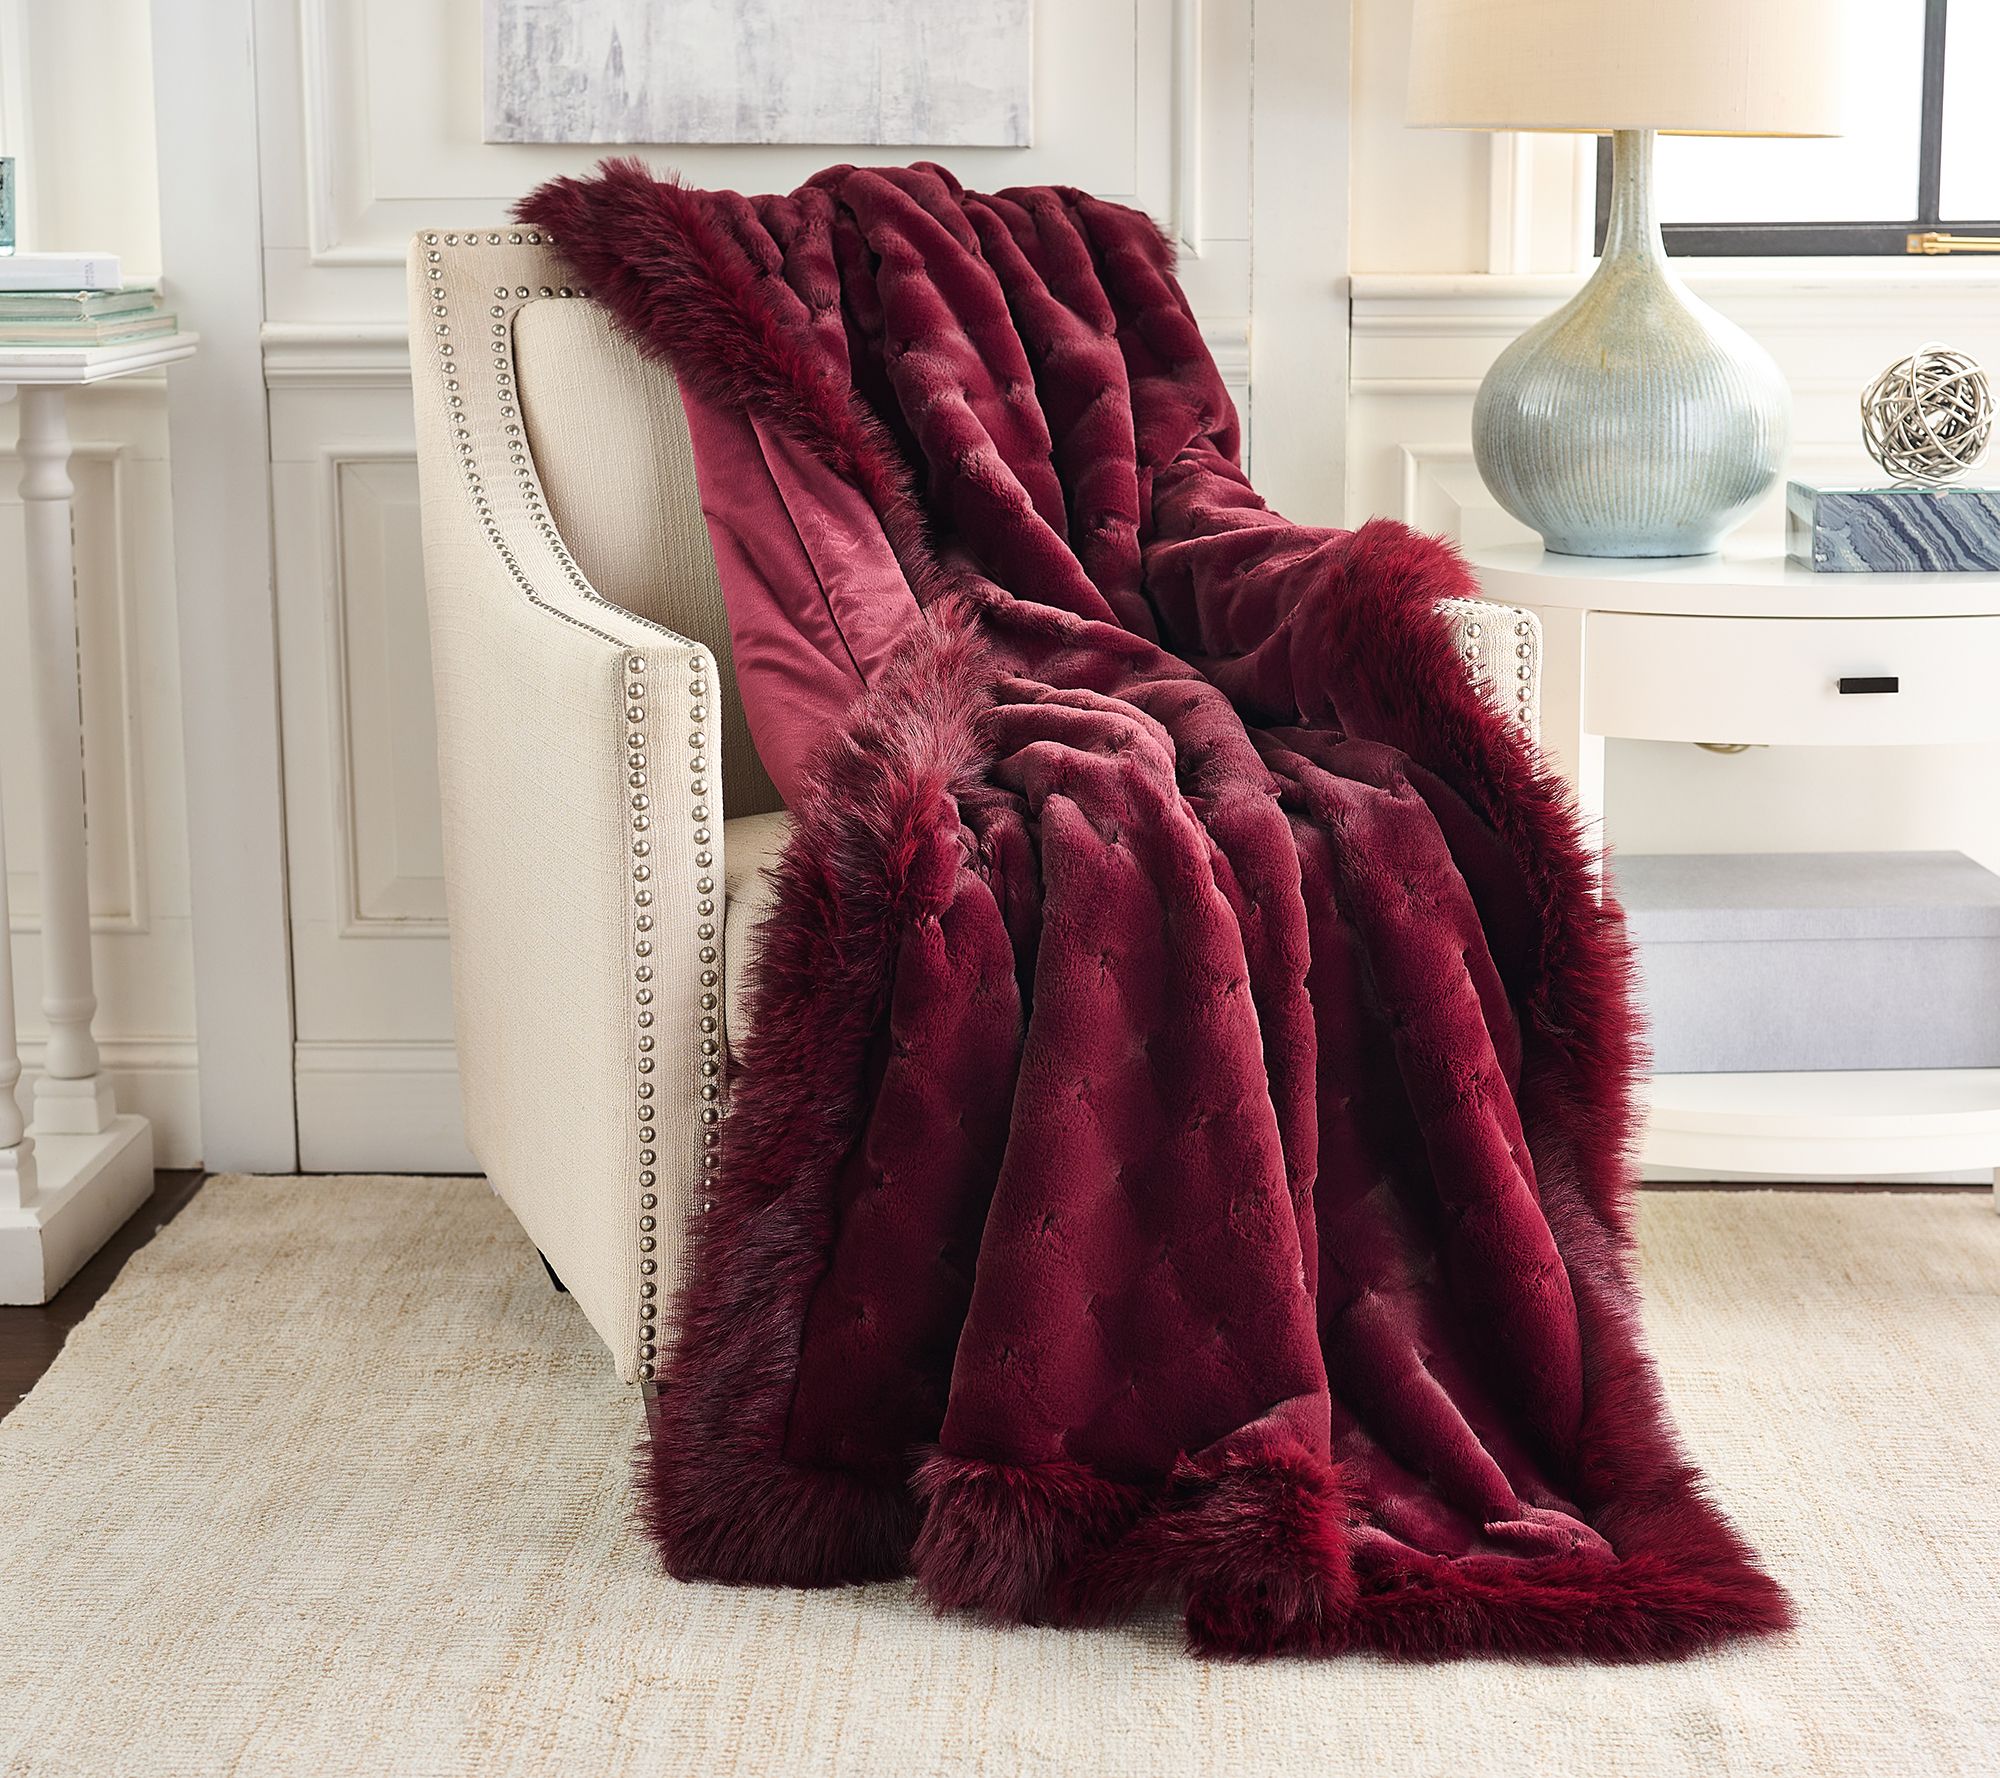 Plush Faux Fur Throw Blanket, Bedspread, Soft Red Brown Fox